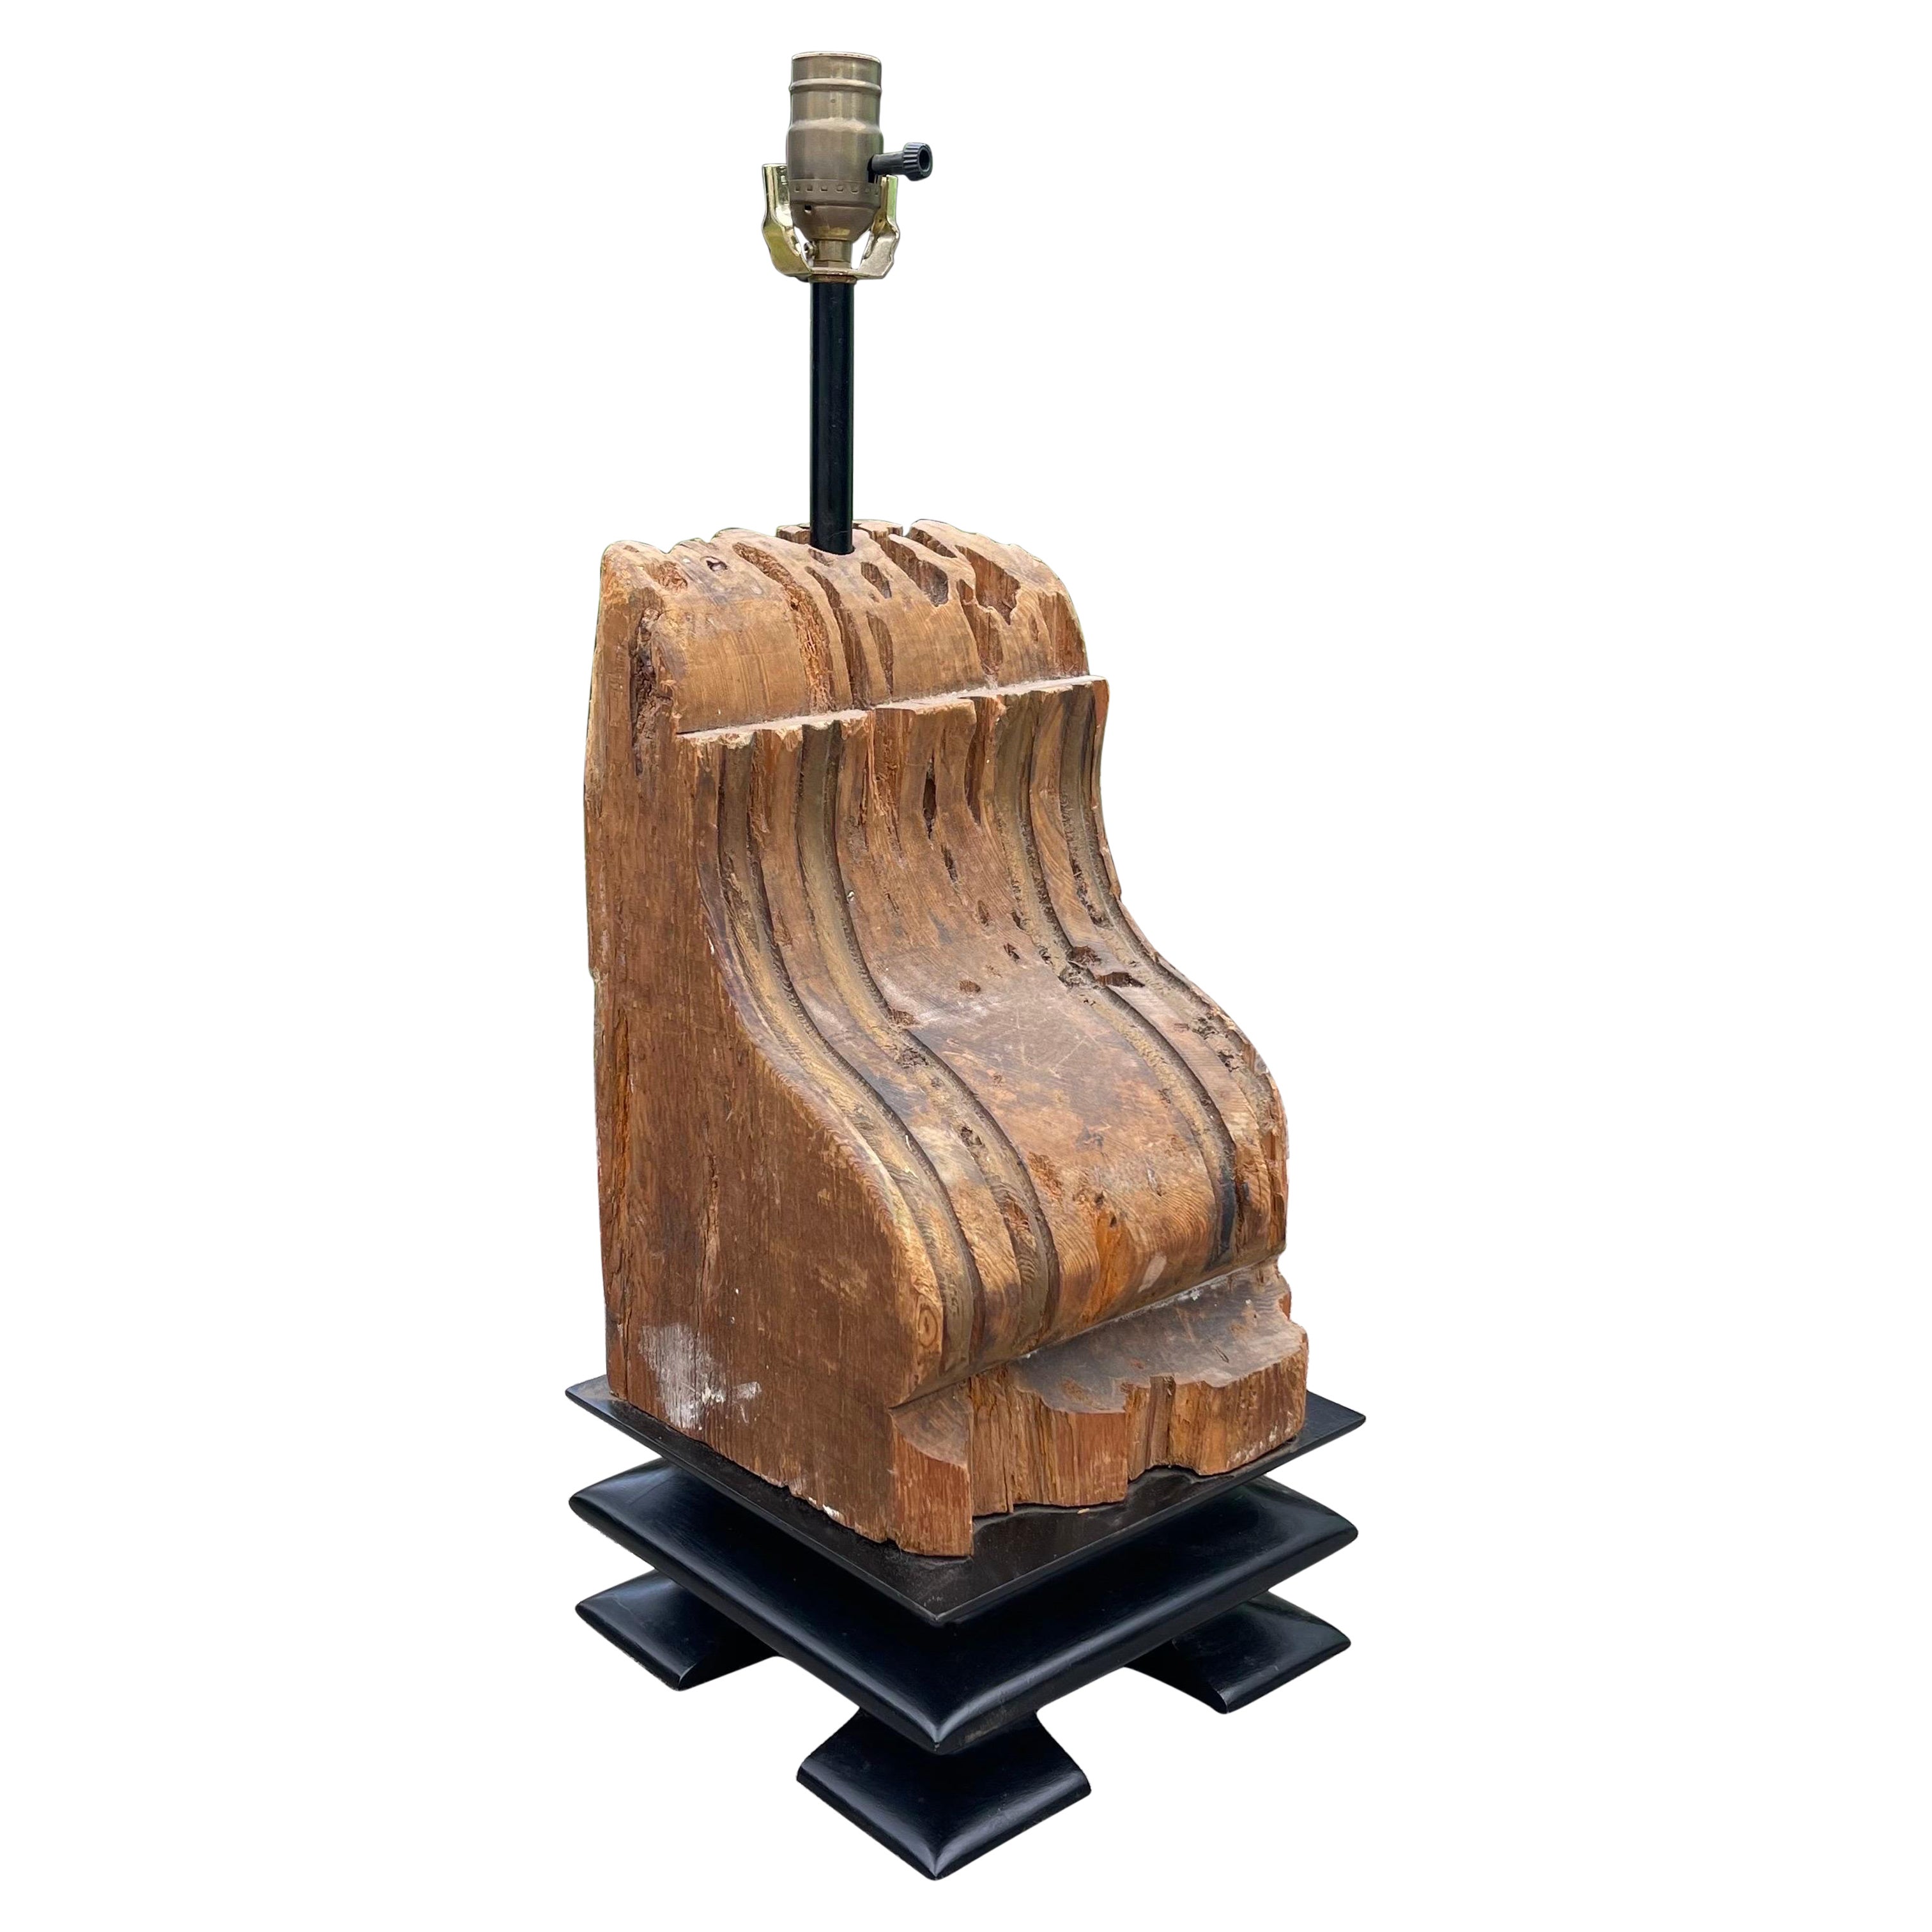 Pecky Cypress Corbel Table Lamp